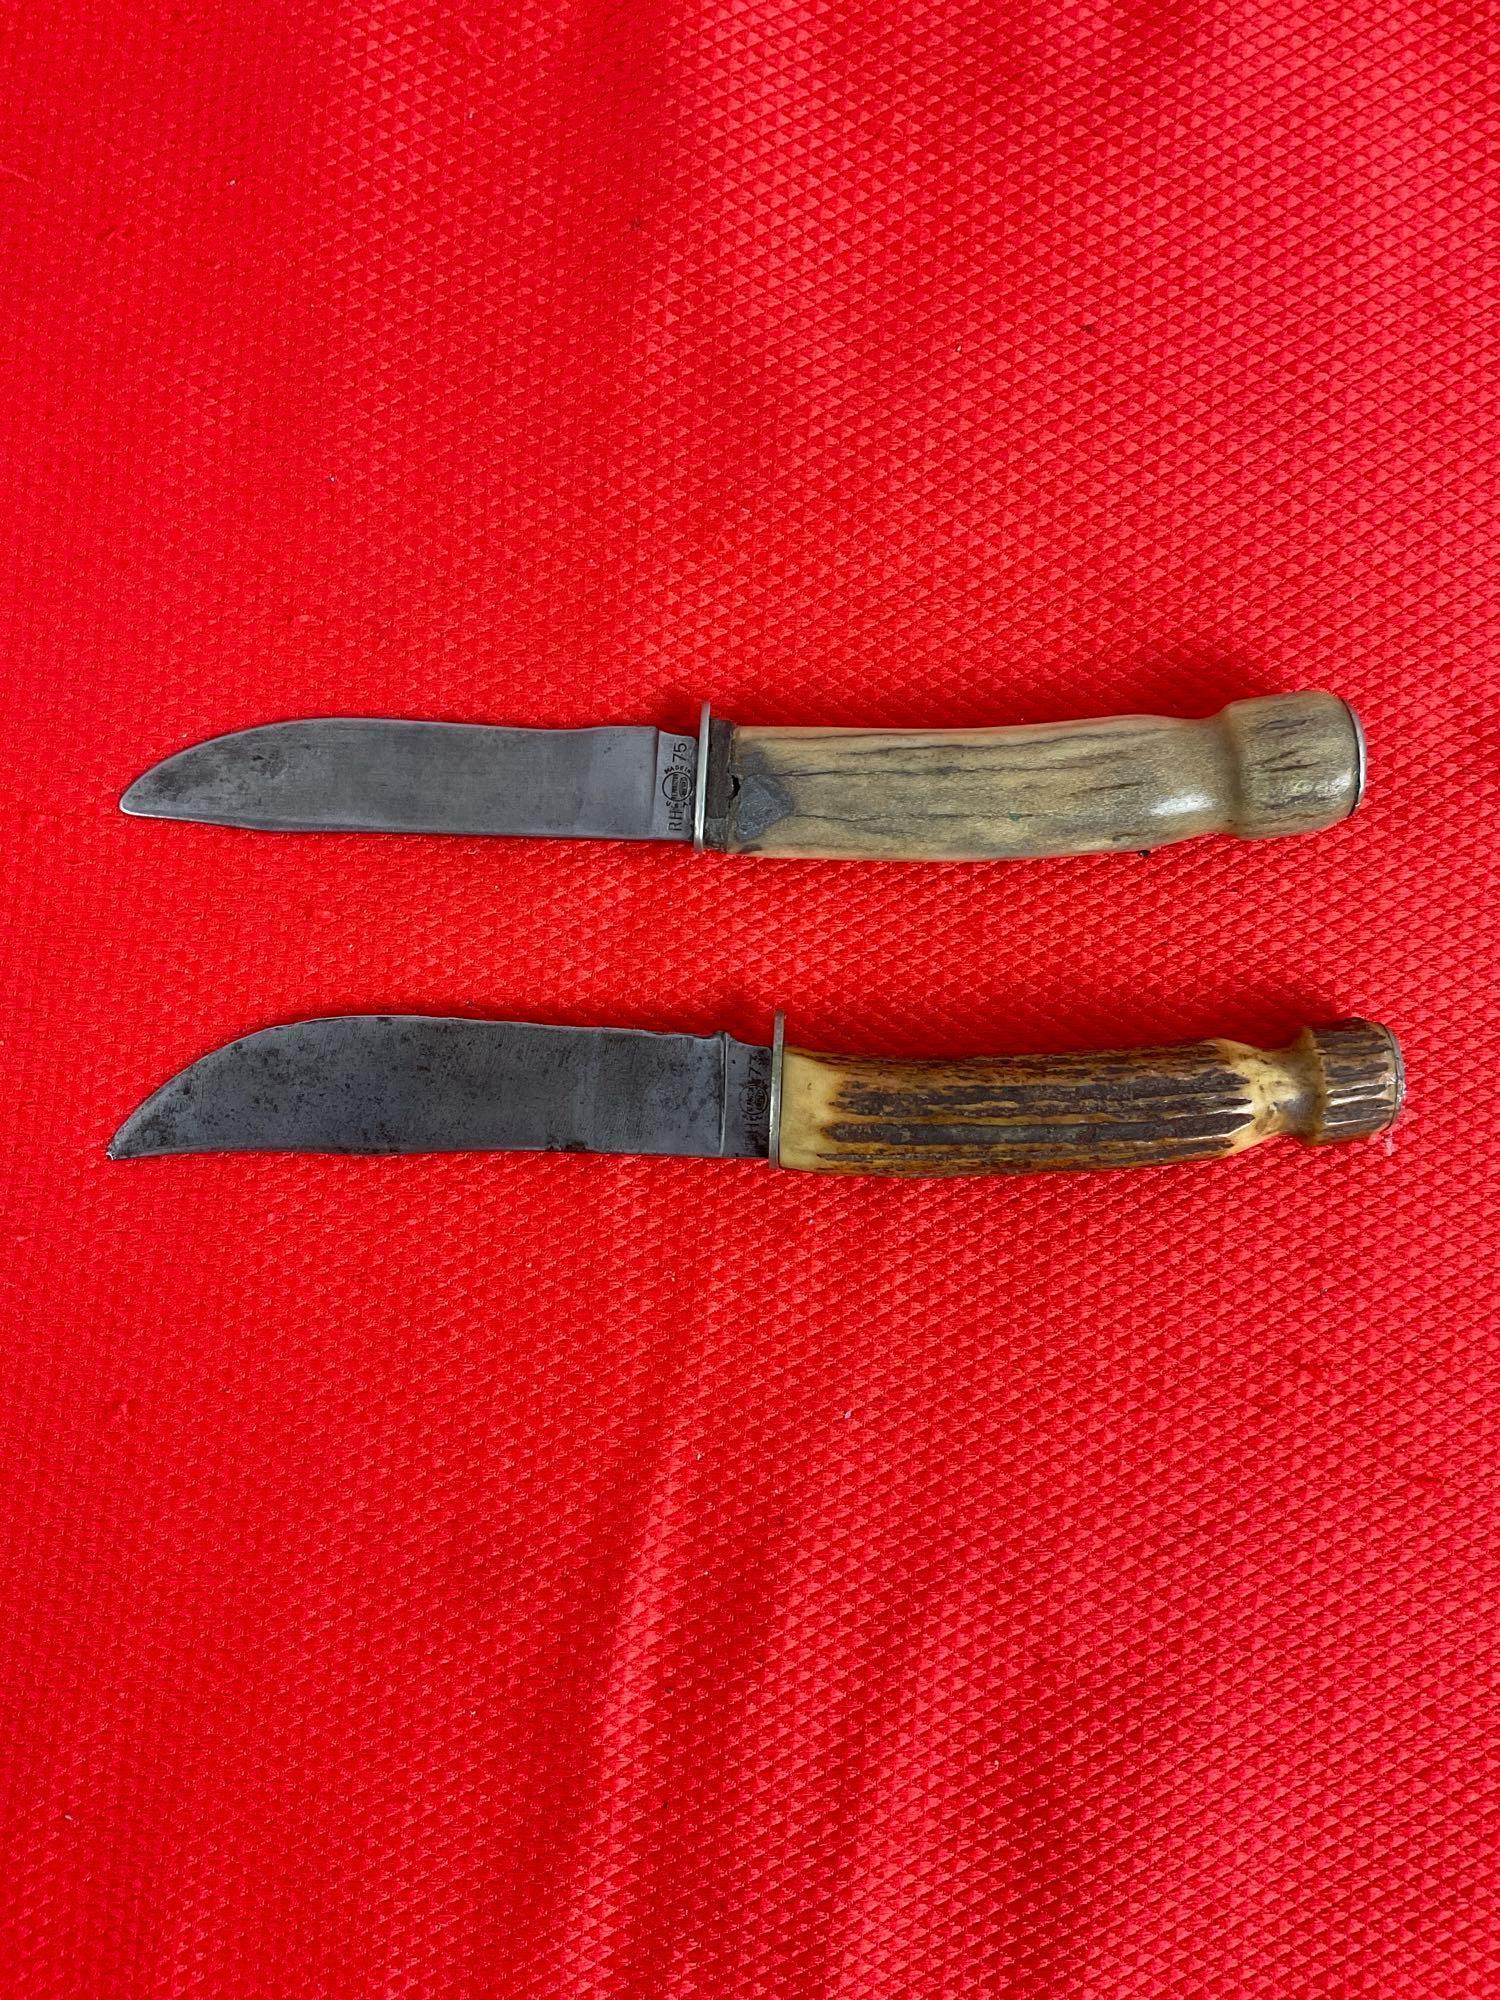 2 pcs Vintage Remington Steel Fixed Blade Knives w/ Antler Handles & Sheathes. Models R73 & R75. ...